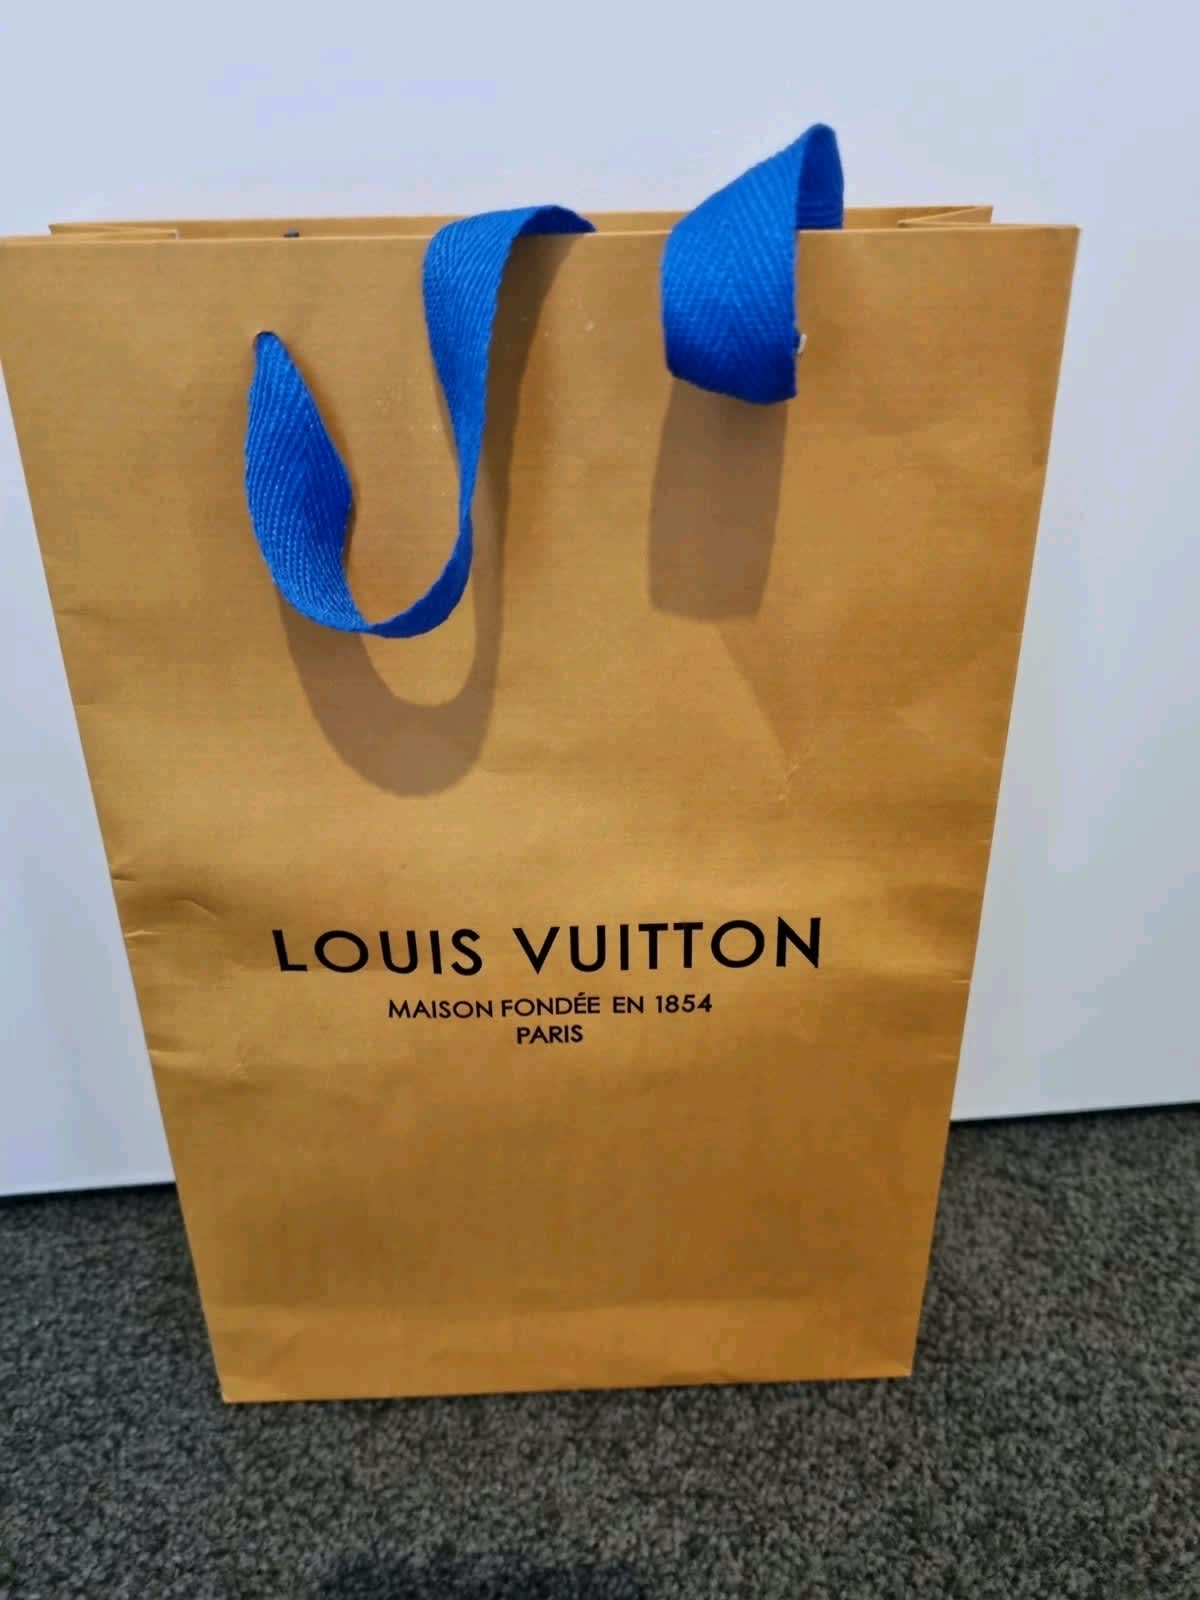 Louis Vuitton Men's Crossbody Bags, Accessories, Gumtree Australia  Parramatta Area - Guildford